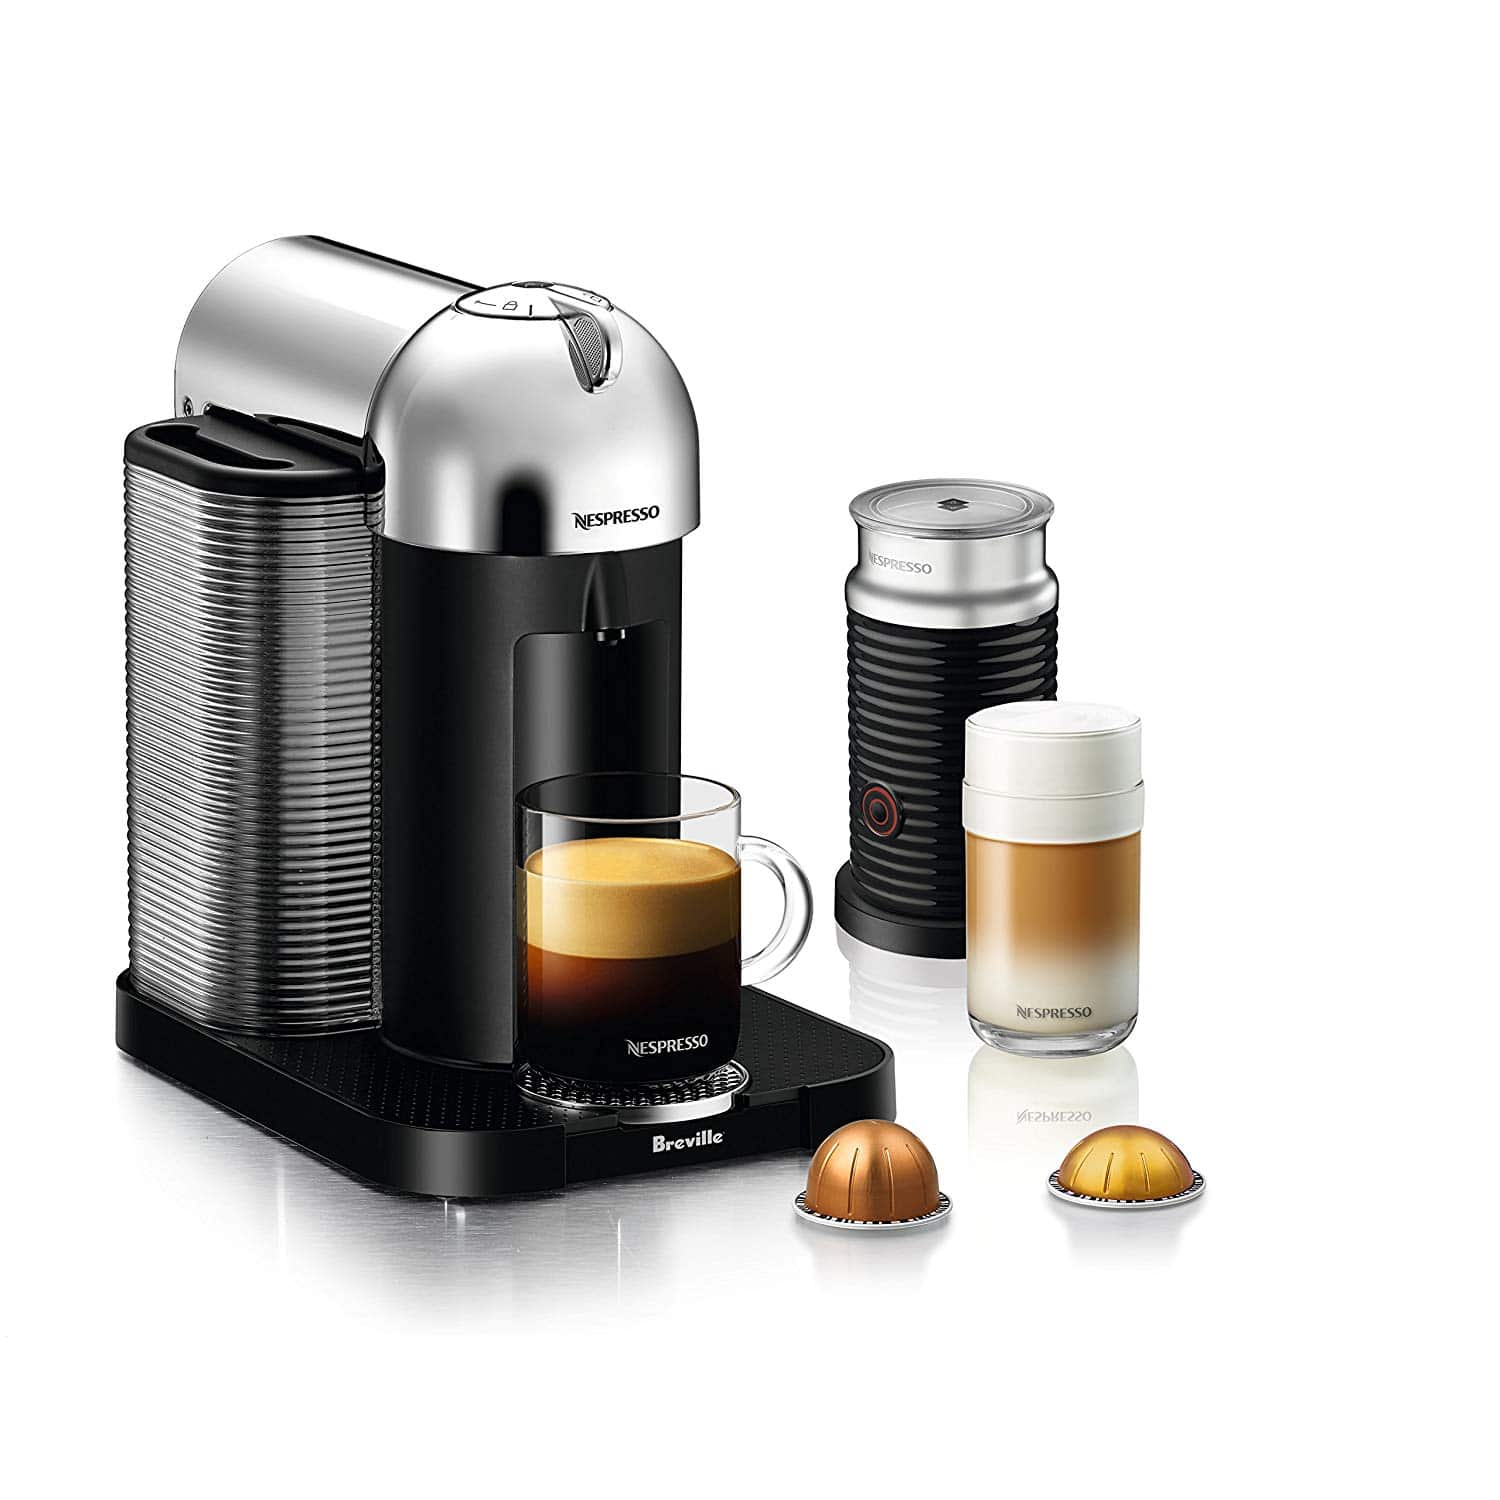 The best coffee machine, coffee, making coffee, kitchen gadgets, top coffee machines, 